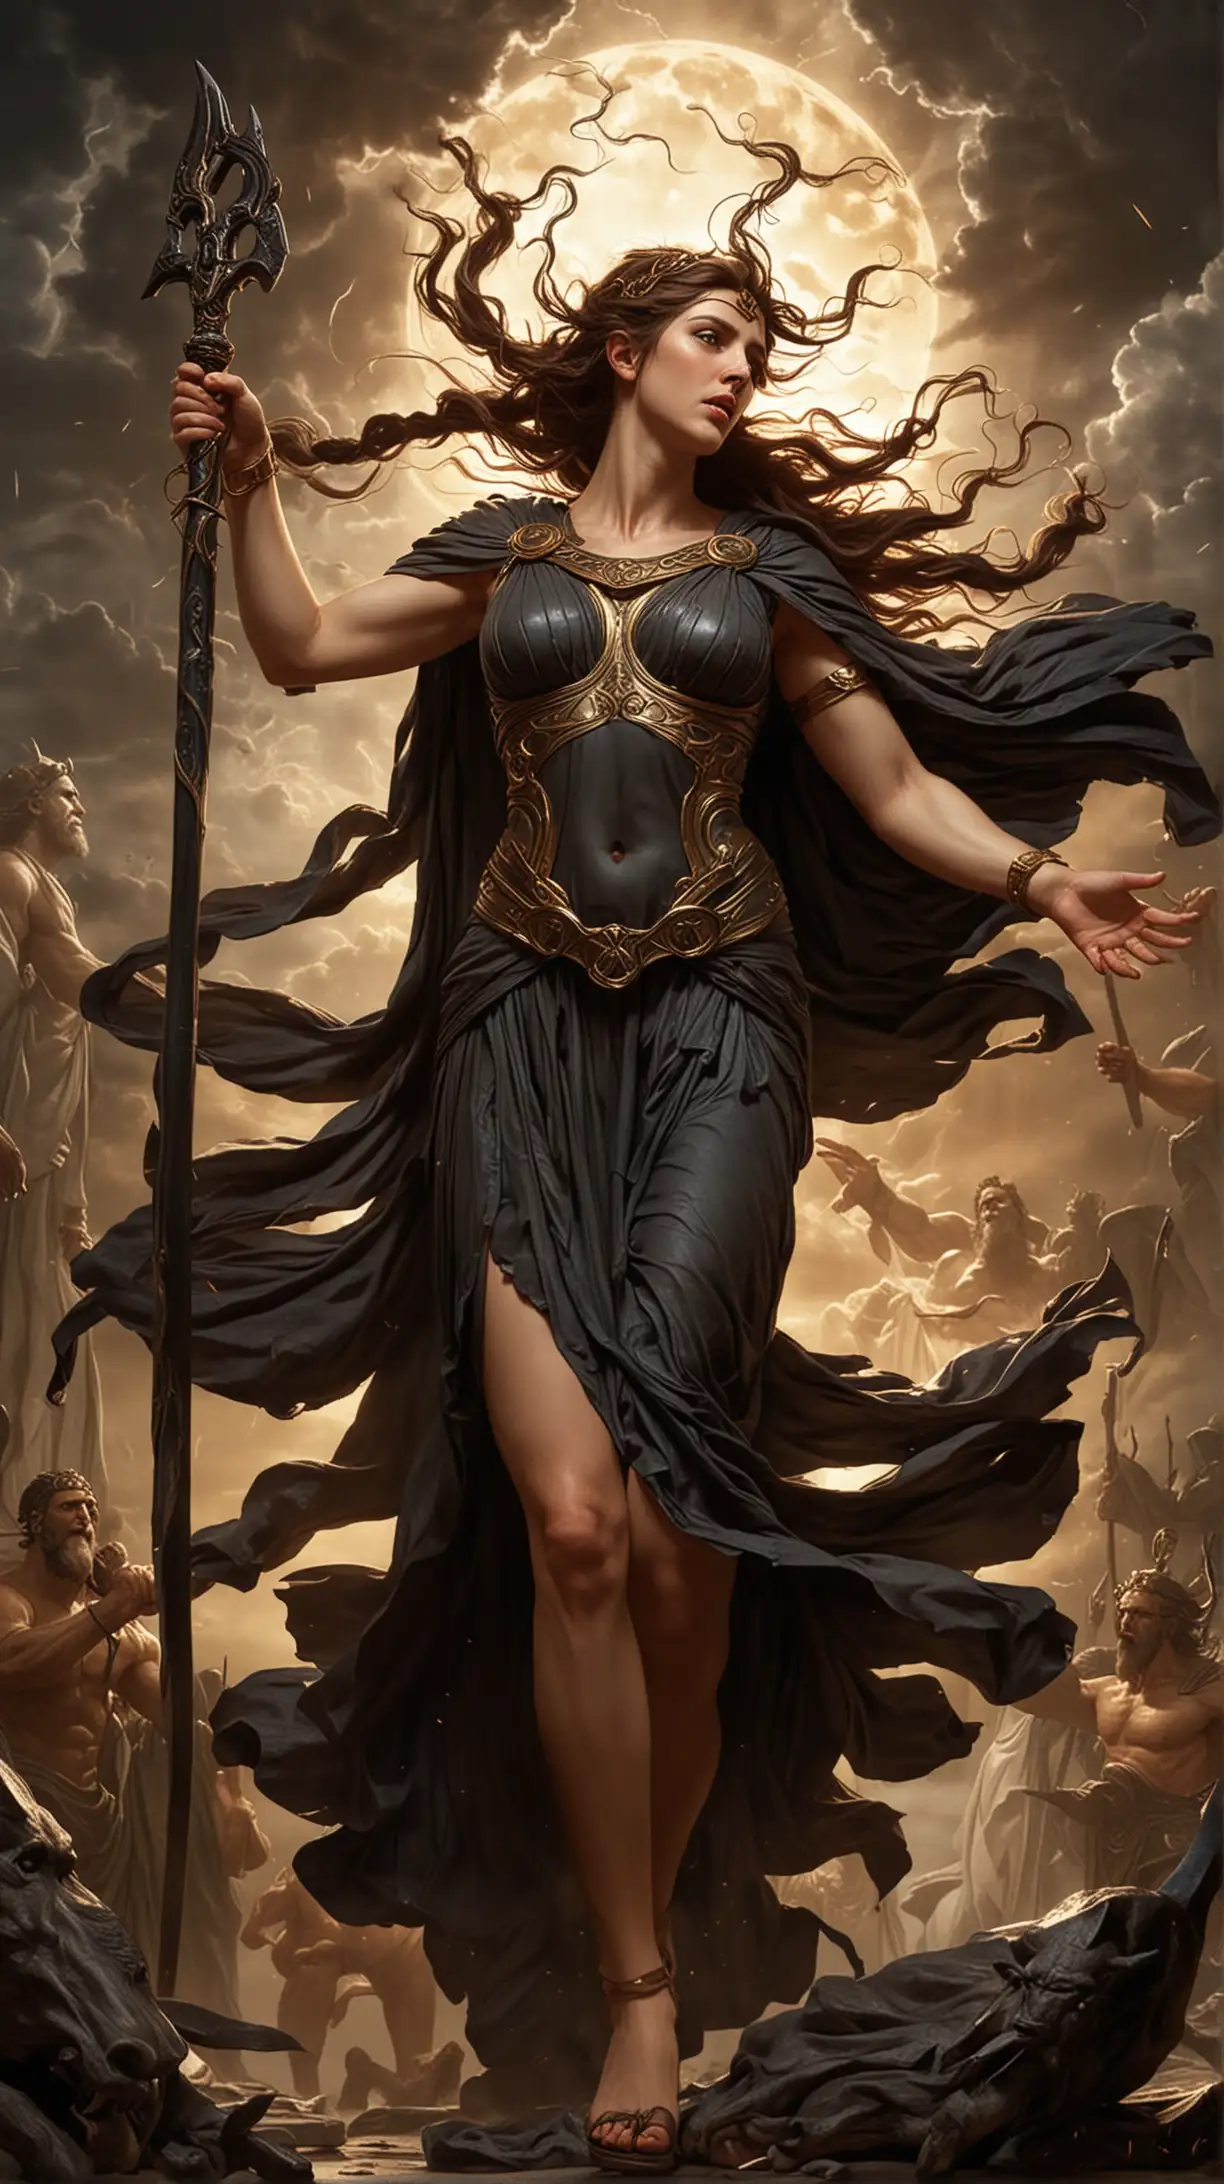 Powerful Primordial Goddess Nyx in Revered Silence